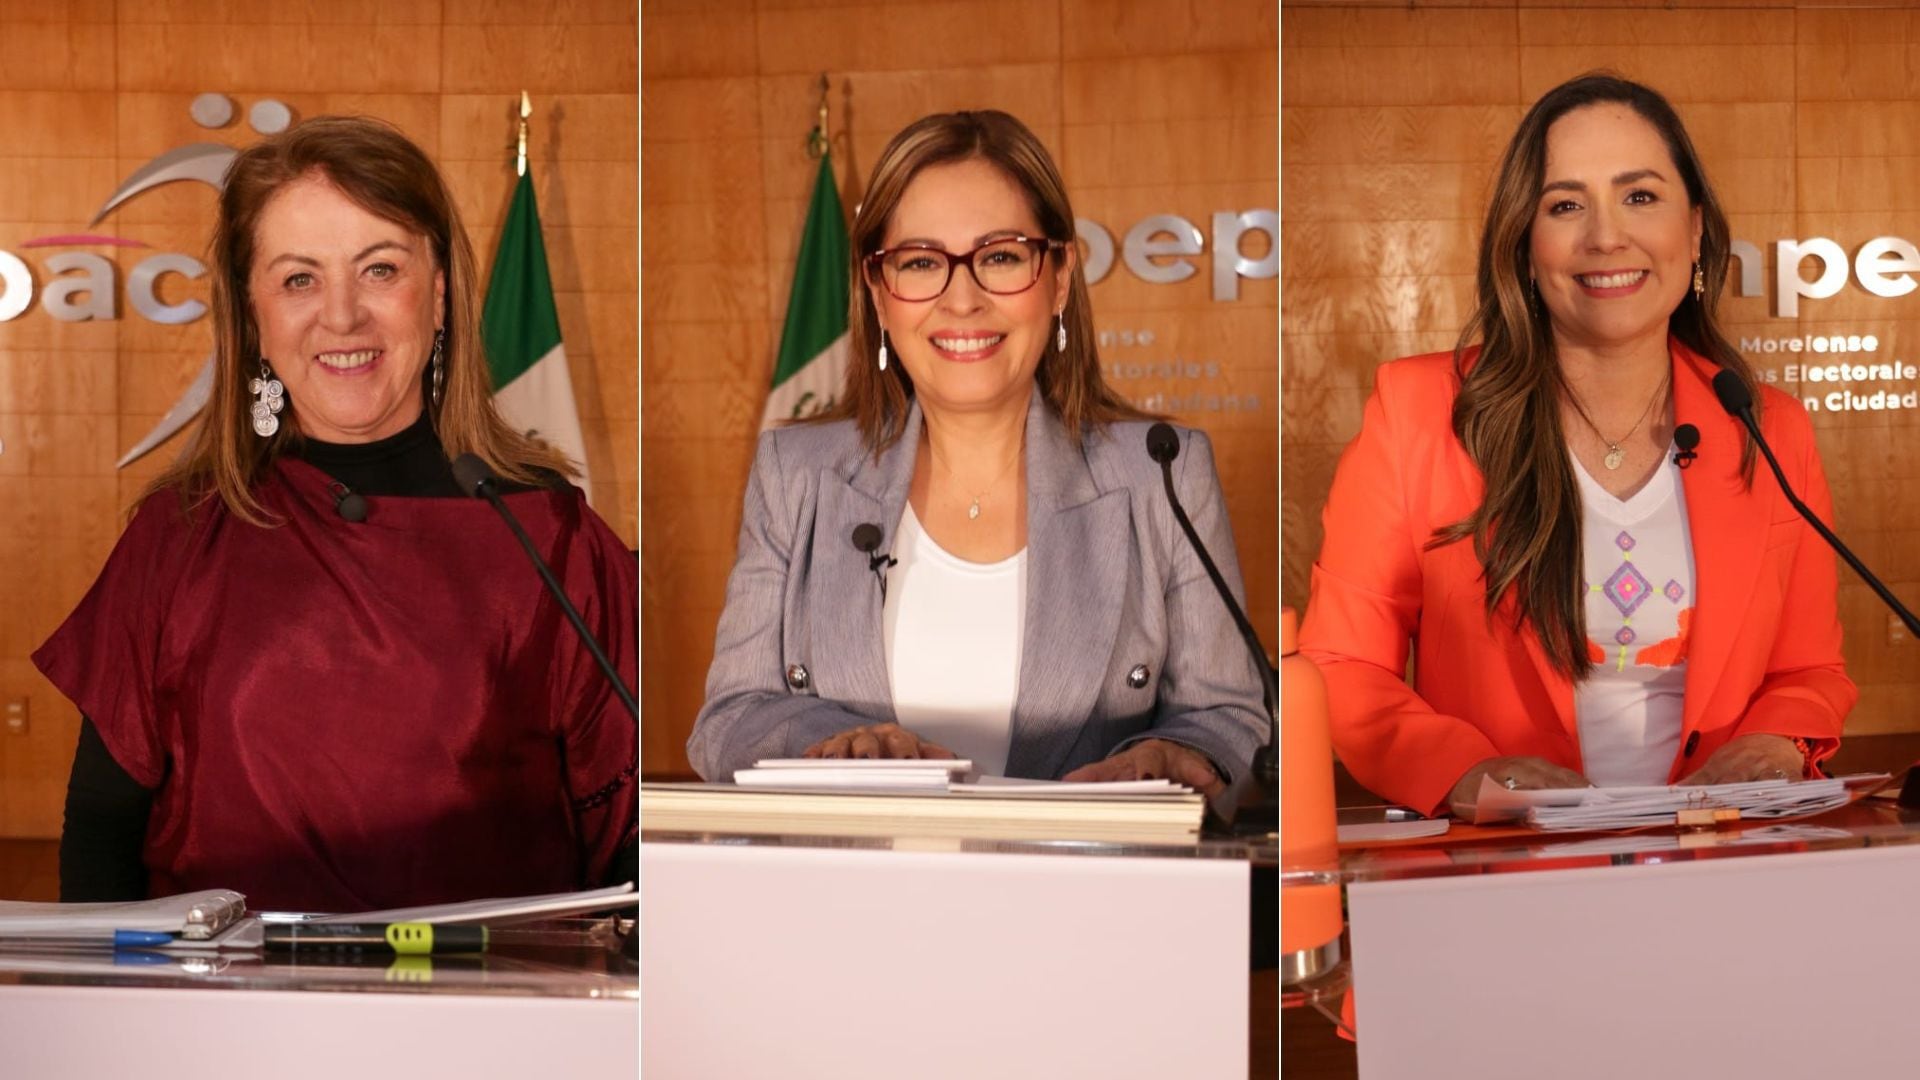 Margarita González, Lucy Meza y Jessica Ortega. (Impepac)